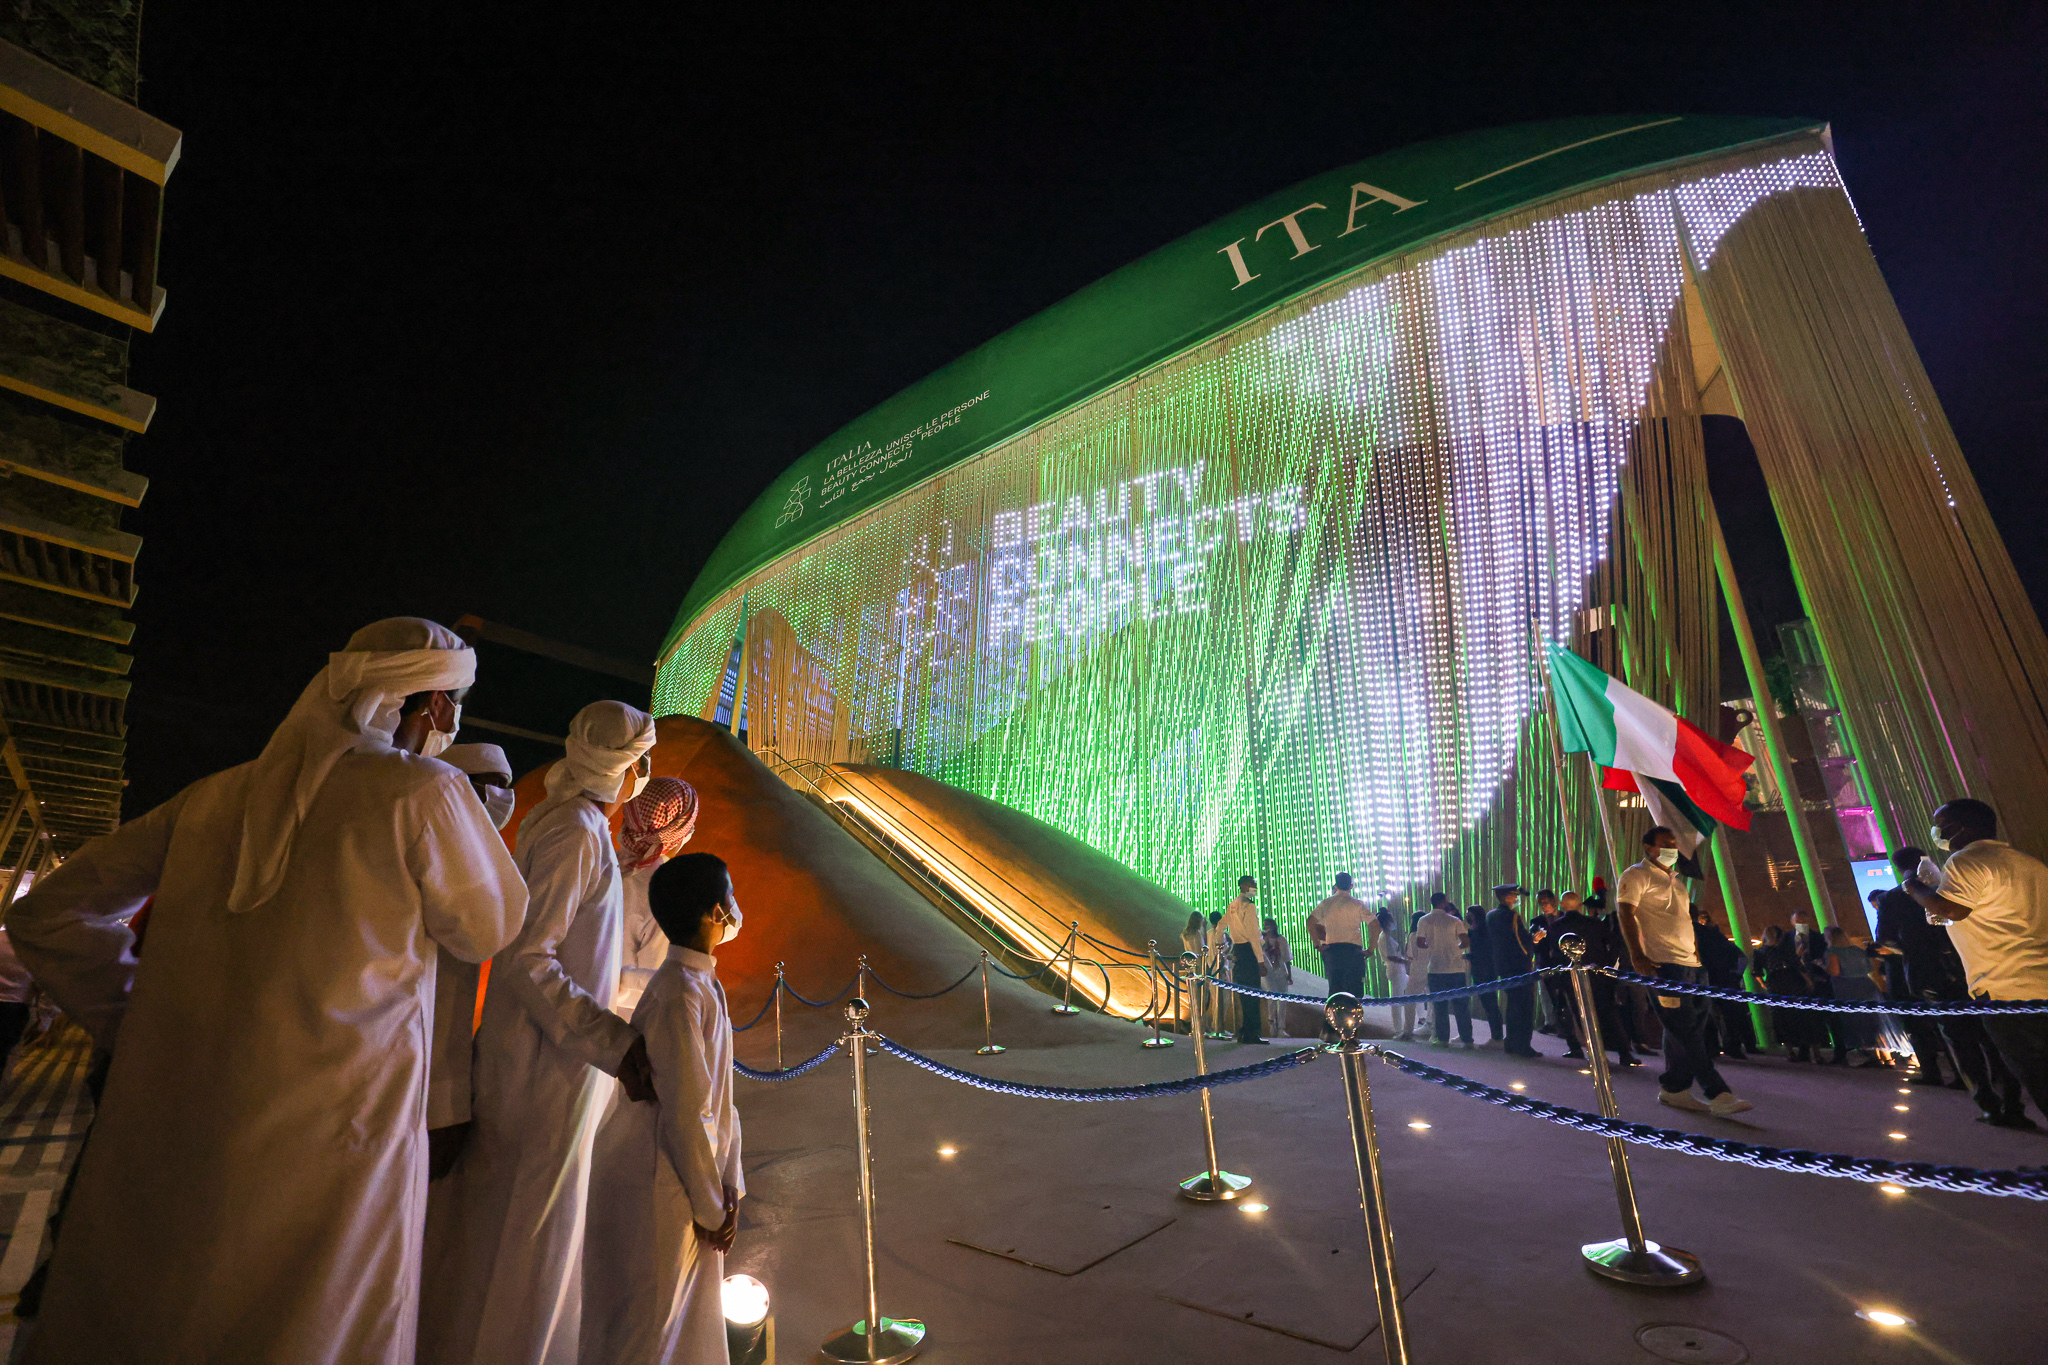 The Italian Pavilion at EXPO 2020